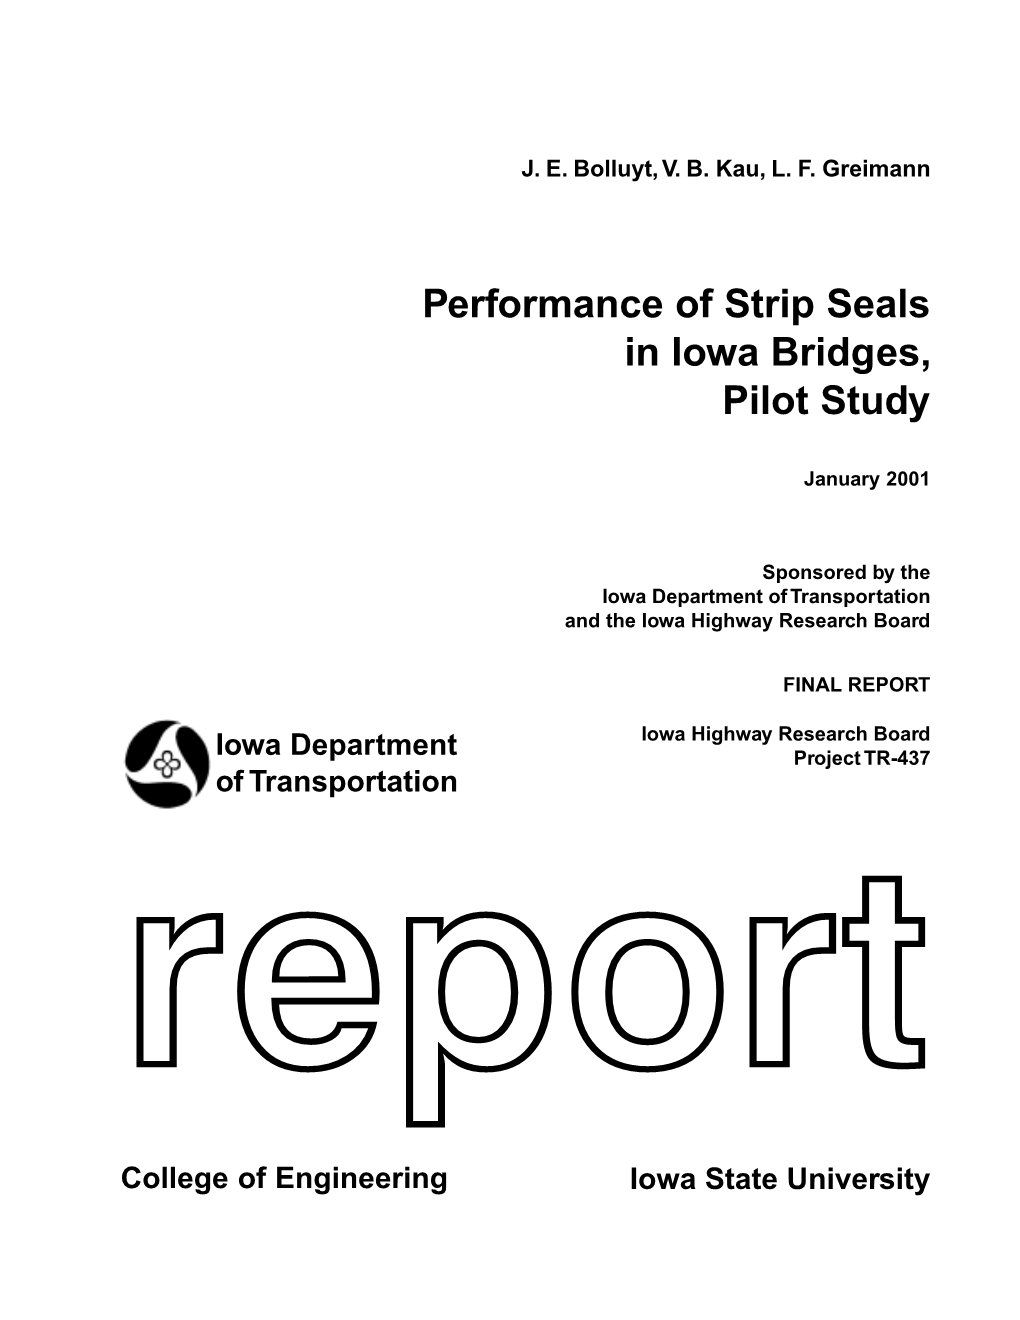 Performance of Strip Seals in Iowa Bridges, Pilot Study